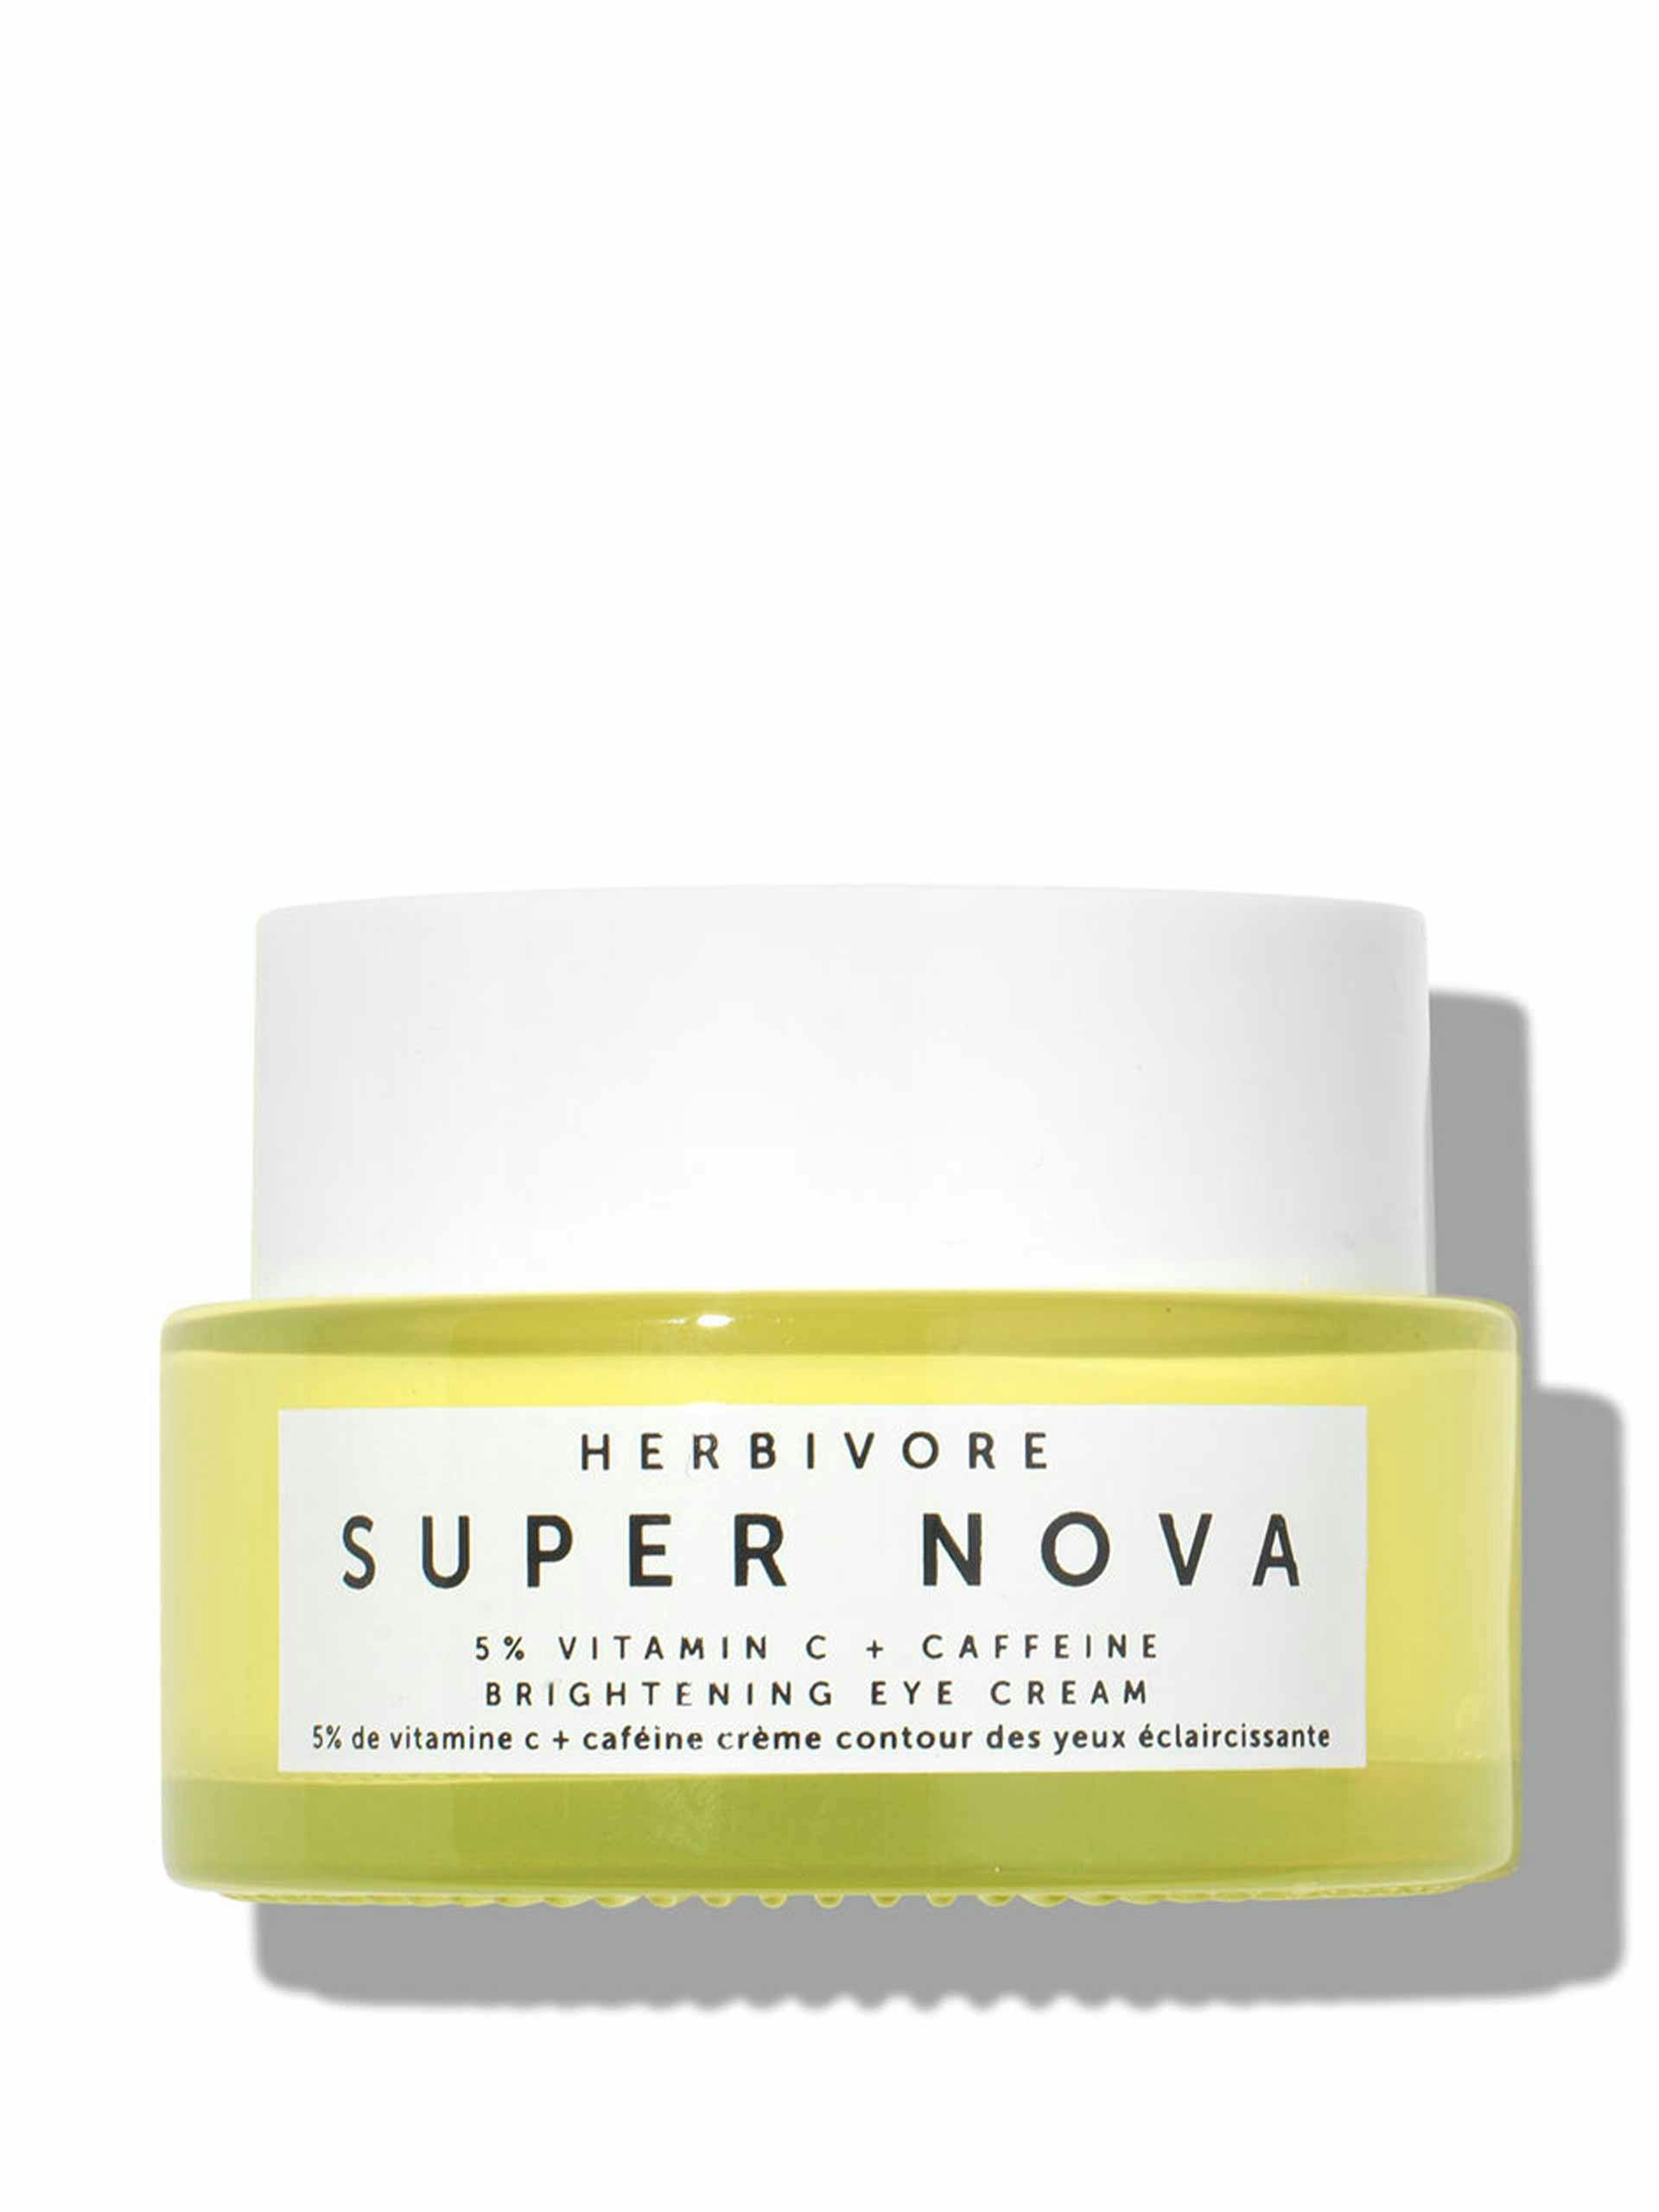 Super Nova brightening eye cream